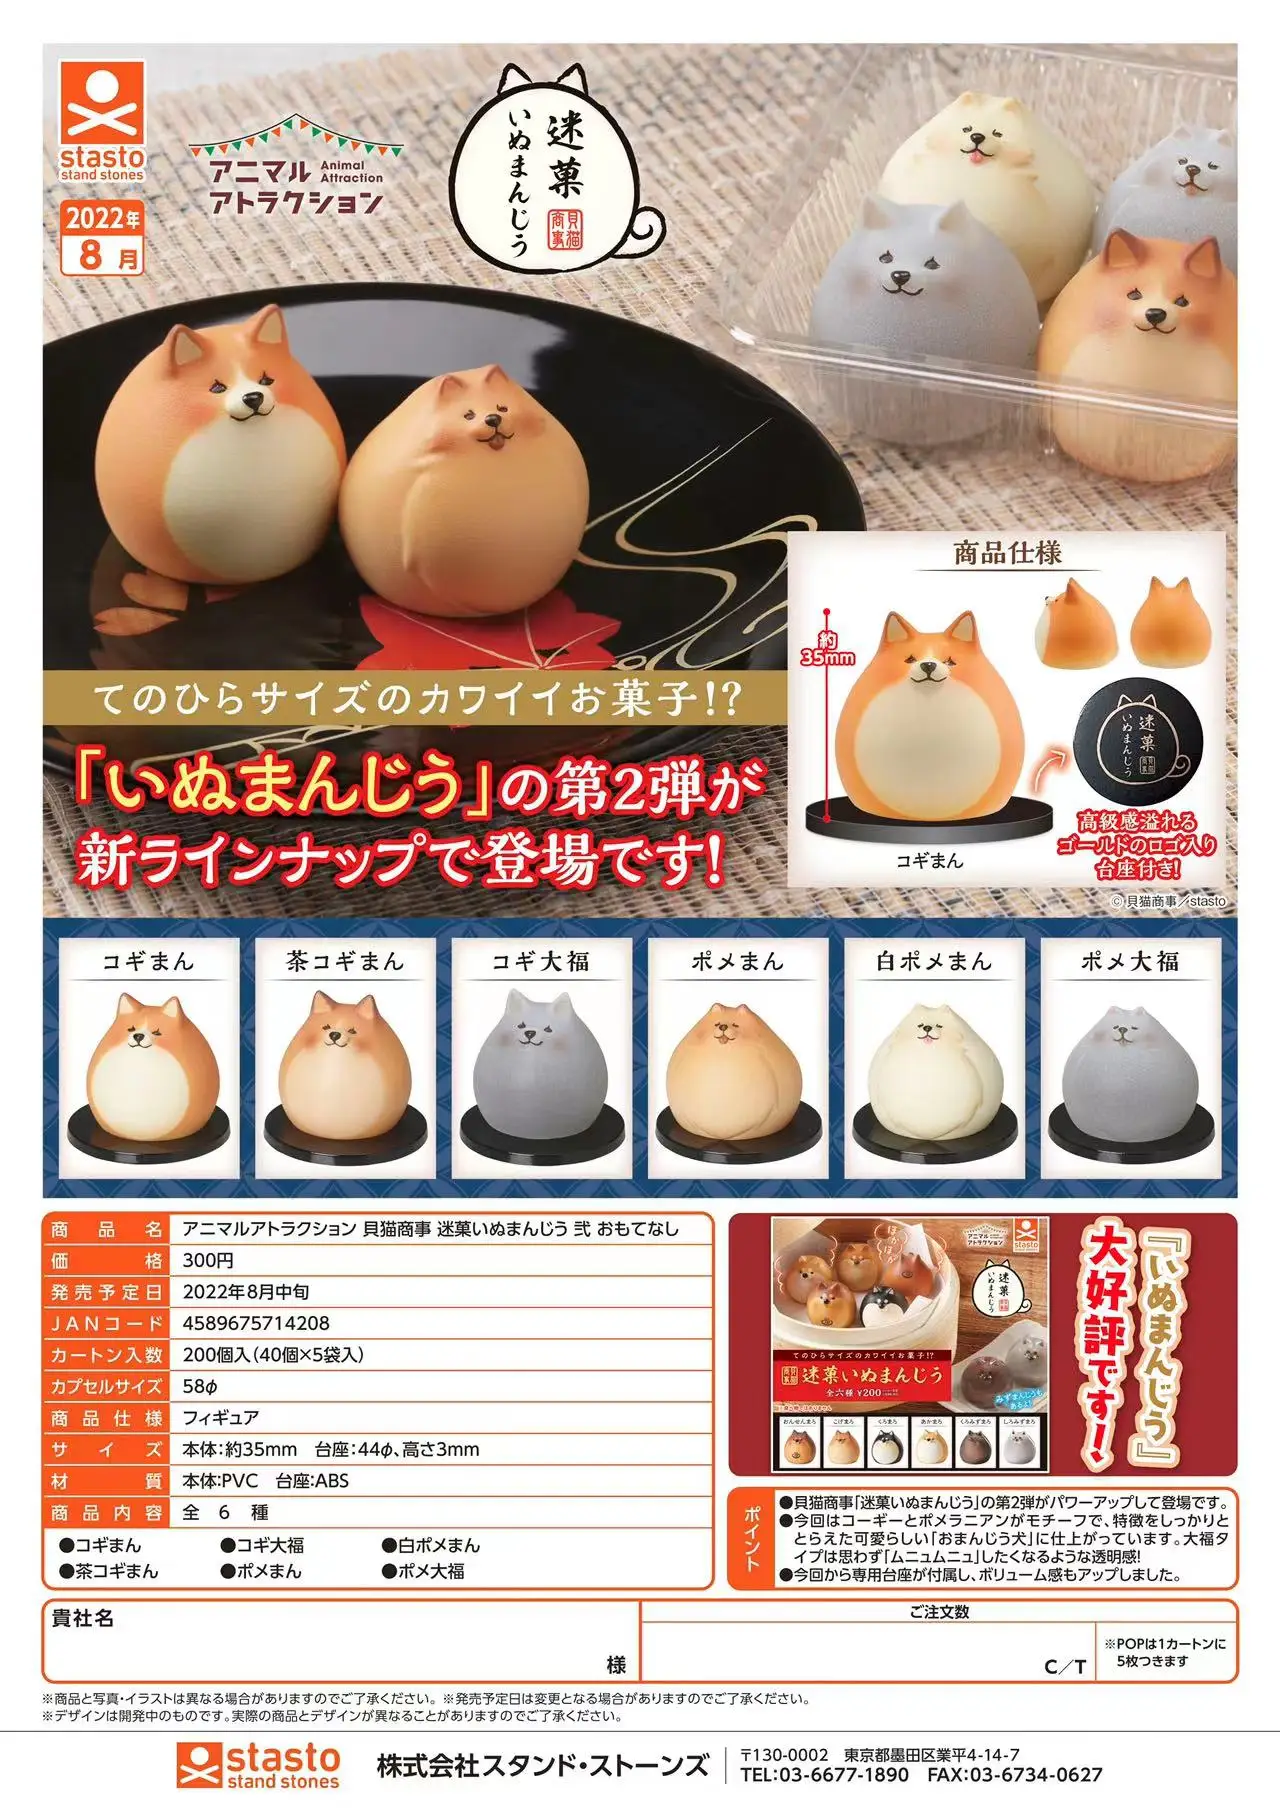 

Japan Stasto Gashapon Capsule Toy Shiba Inu Pomeranian Dumpling 2 Cute Animal Model Decompress Toys